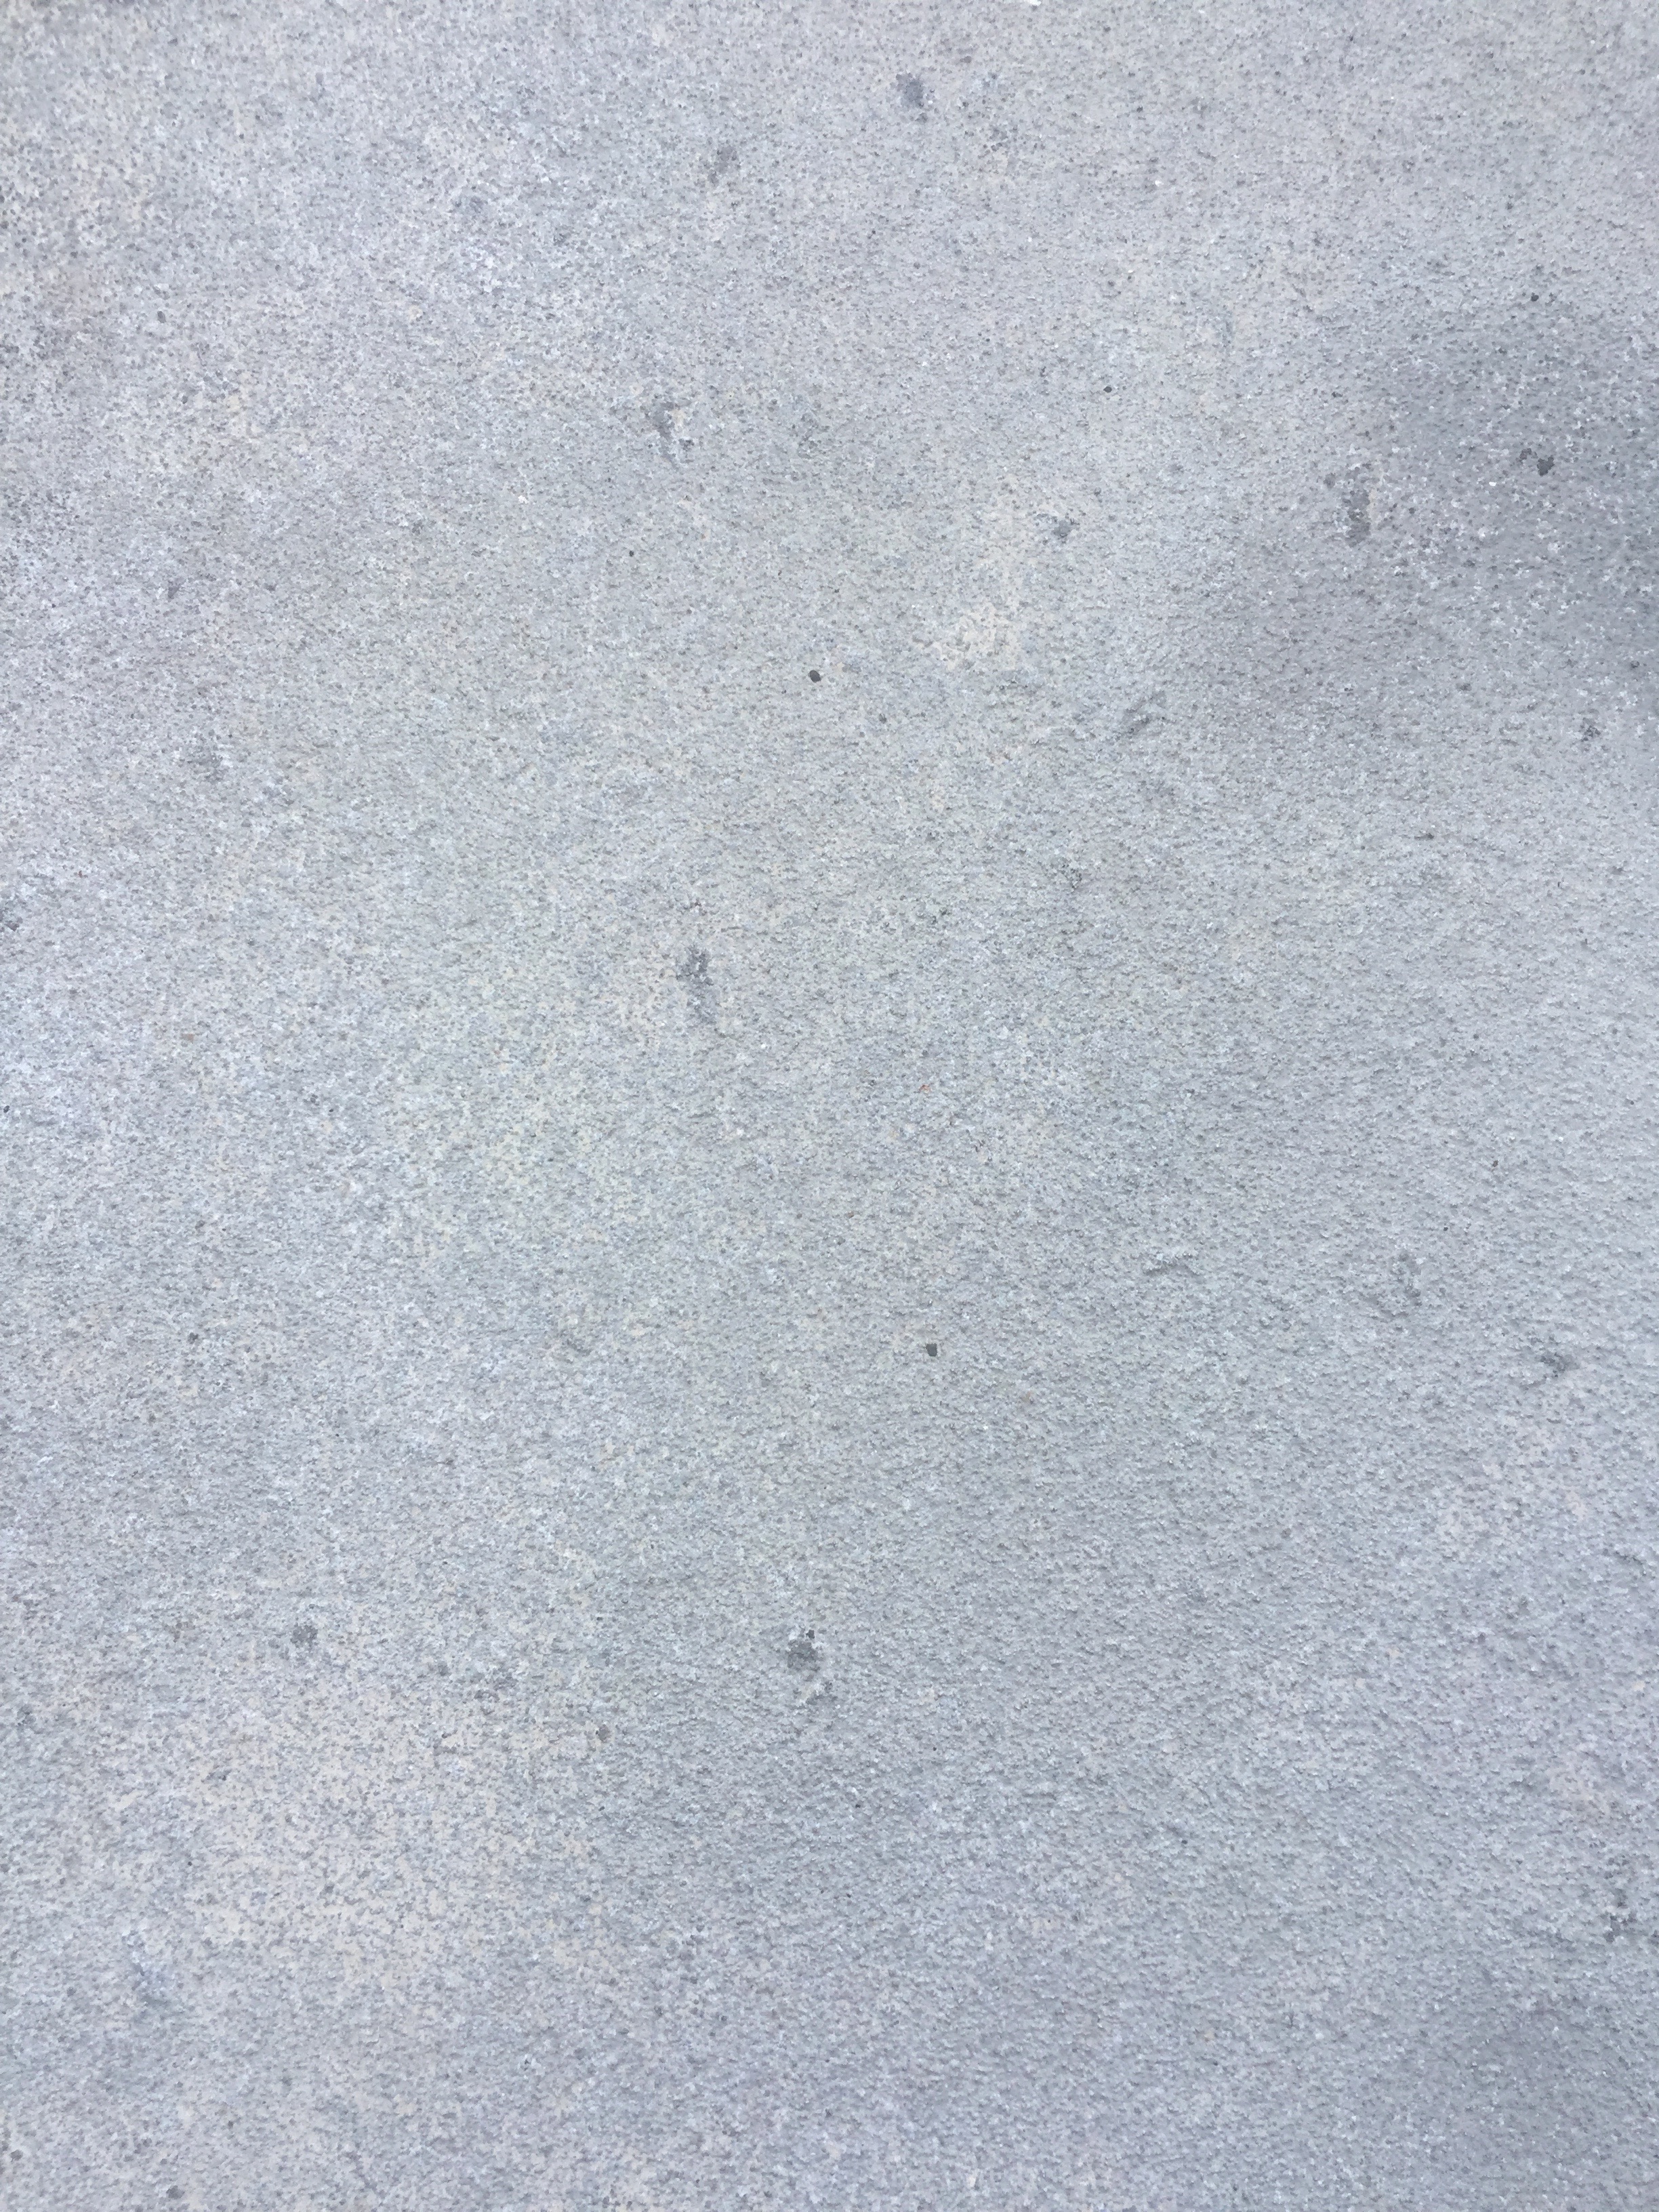 https://everytexture.com/wp-content/uploads/2018/10/everytexture.com-stock-pavement-concrete-texture-00012.jpg